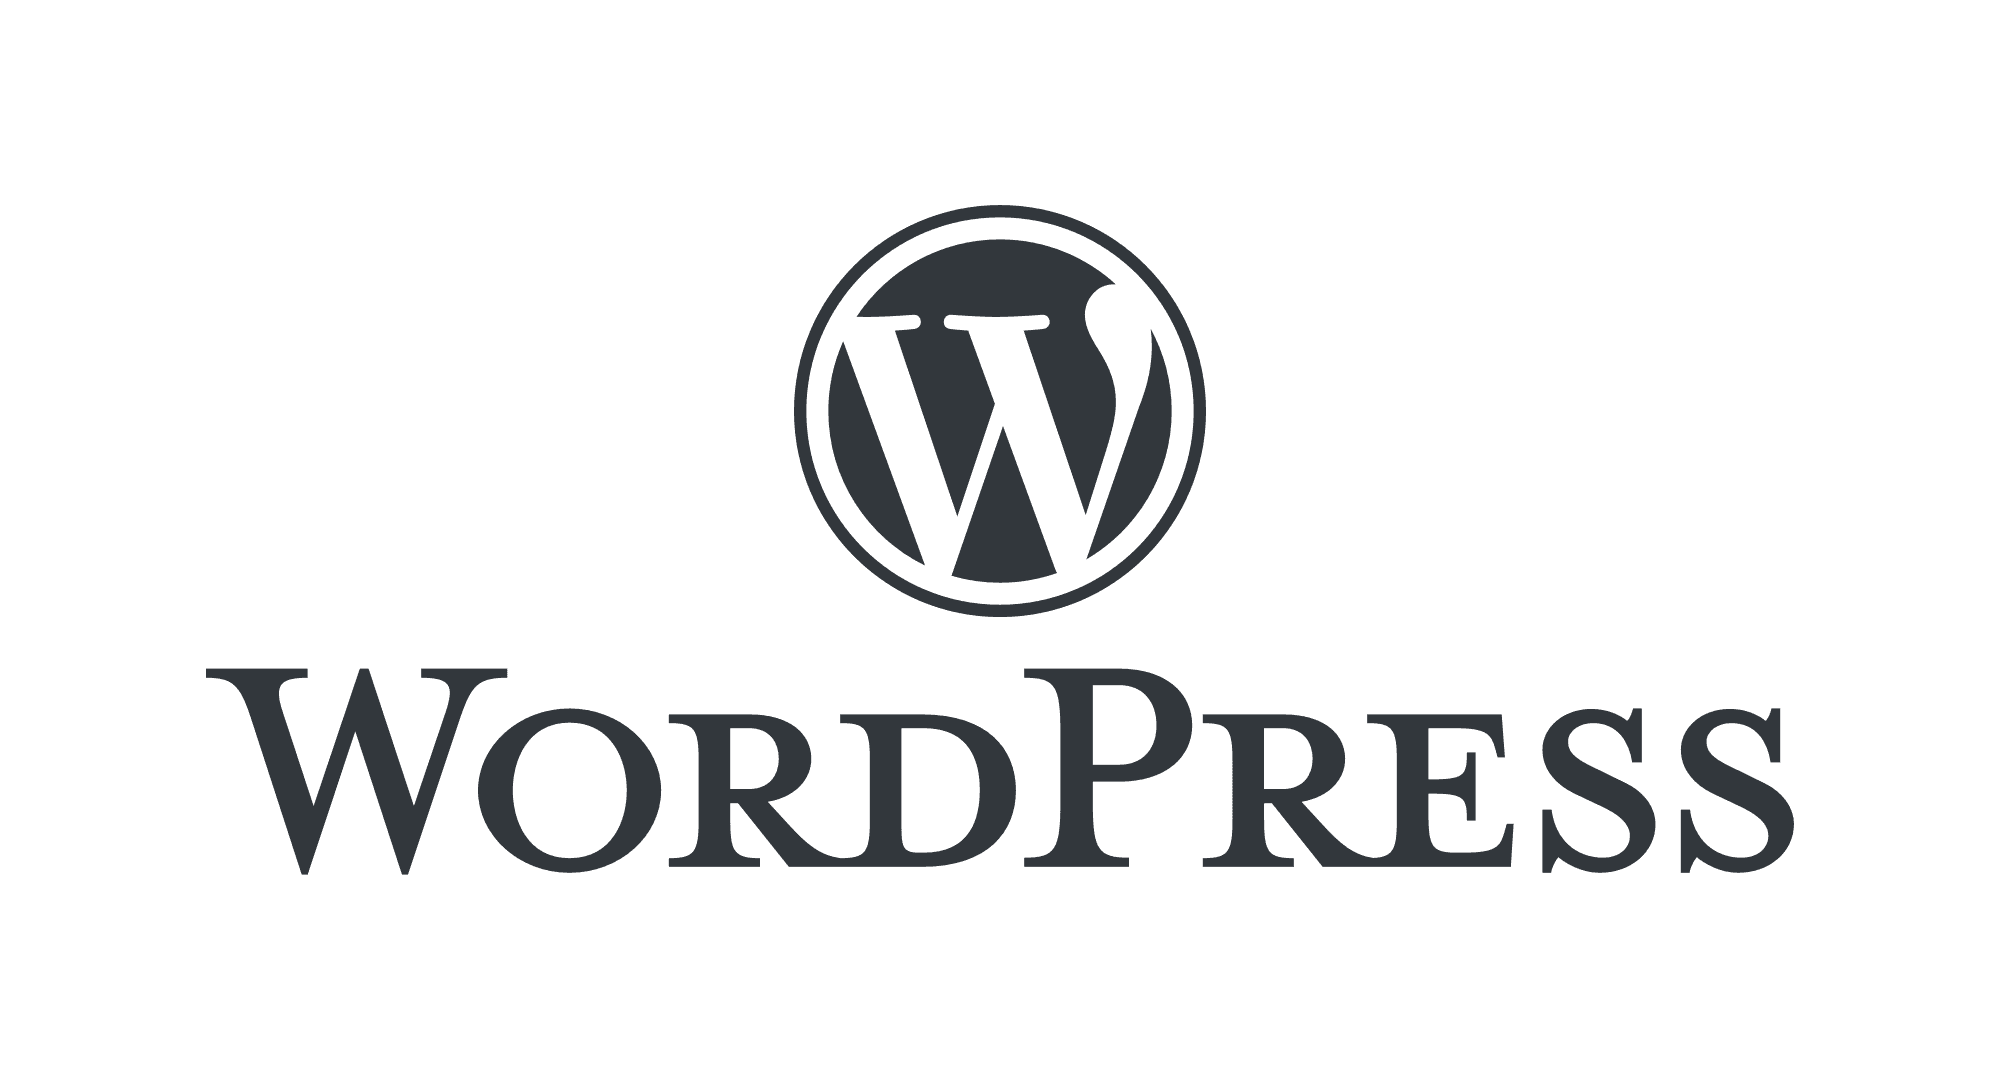 WordPress-logotype-alternative.png